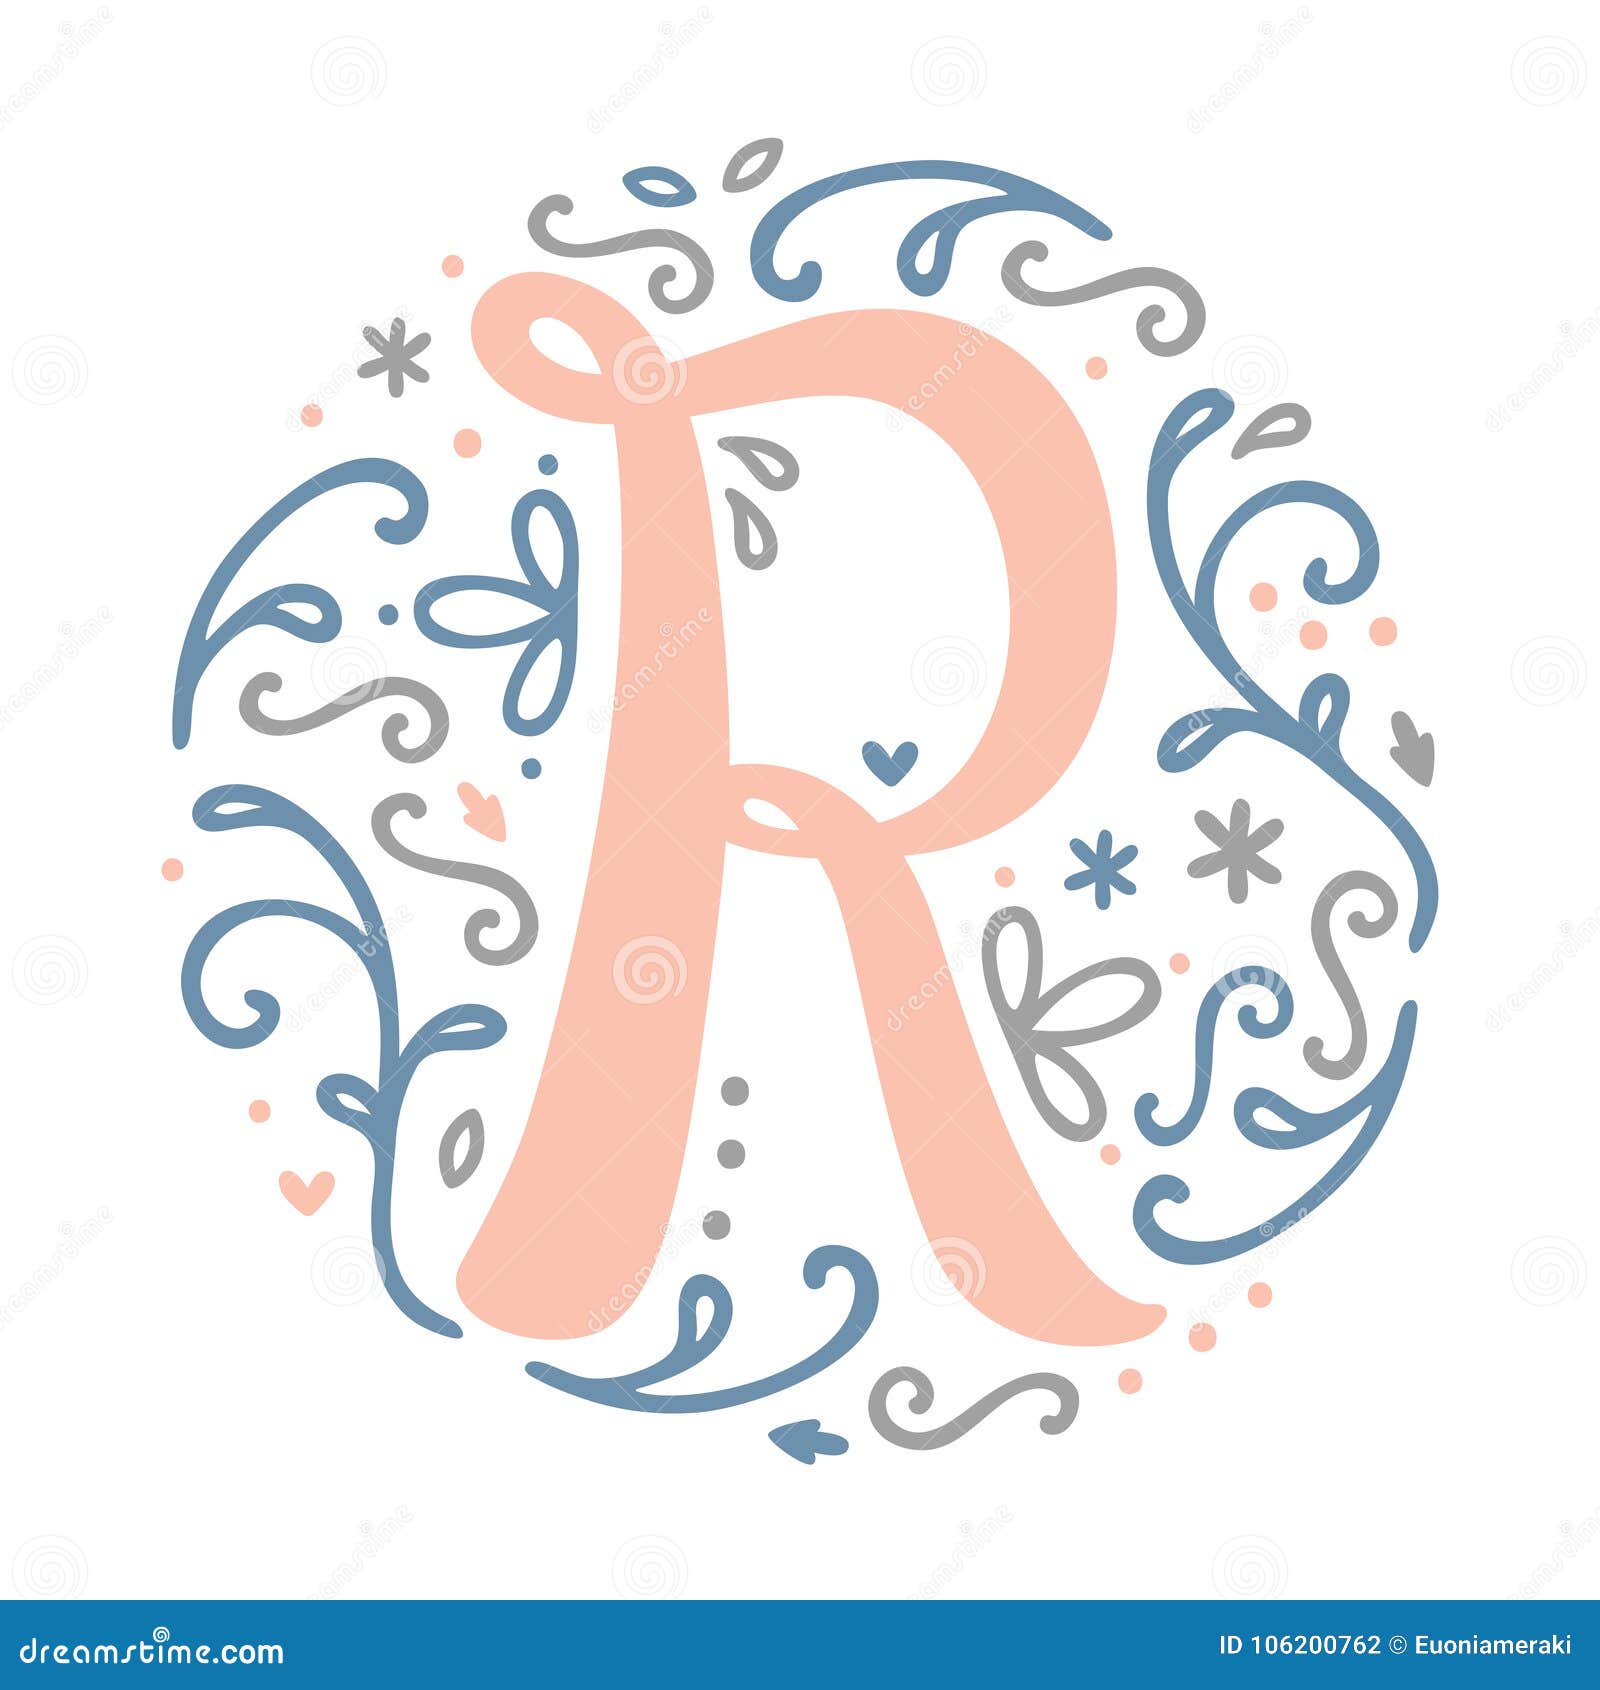 feminine monogram design r letter lovely cute elegant perfect decoration logo label stamp card diary planner sticker etc 106200762